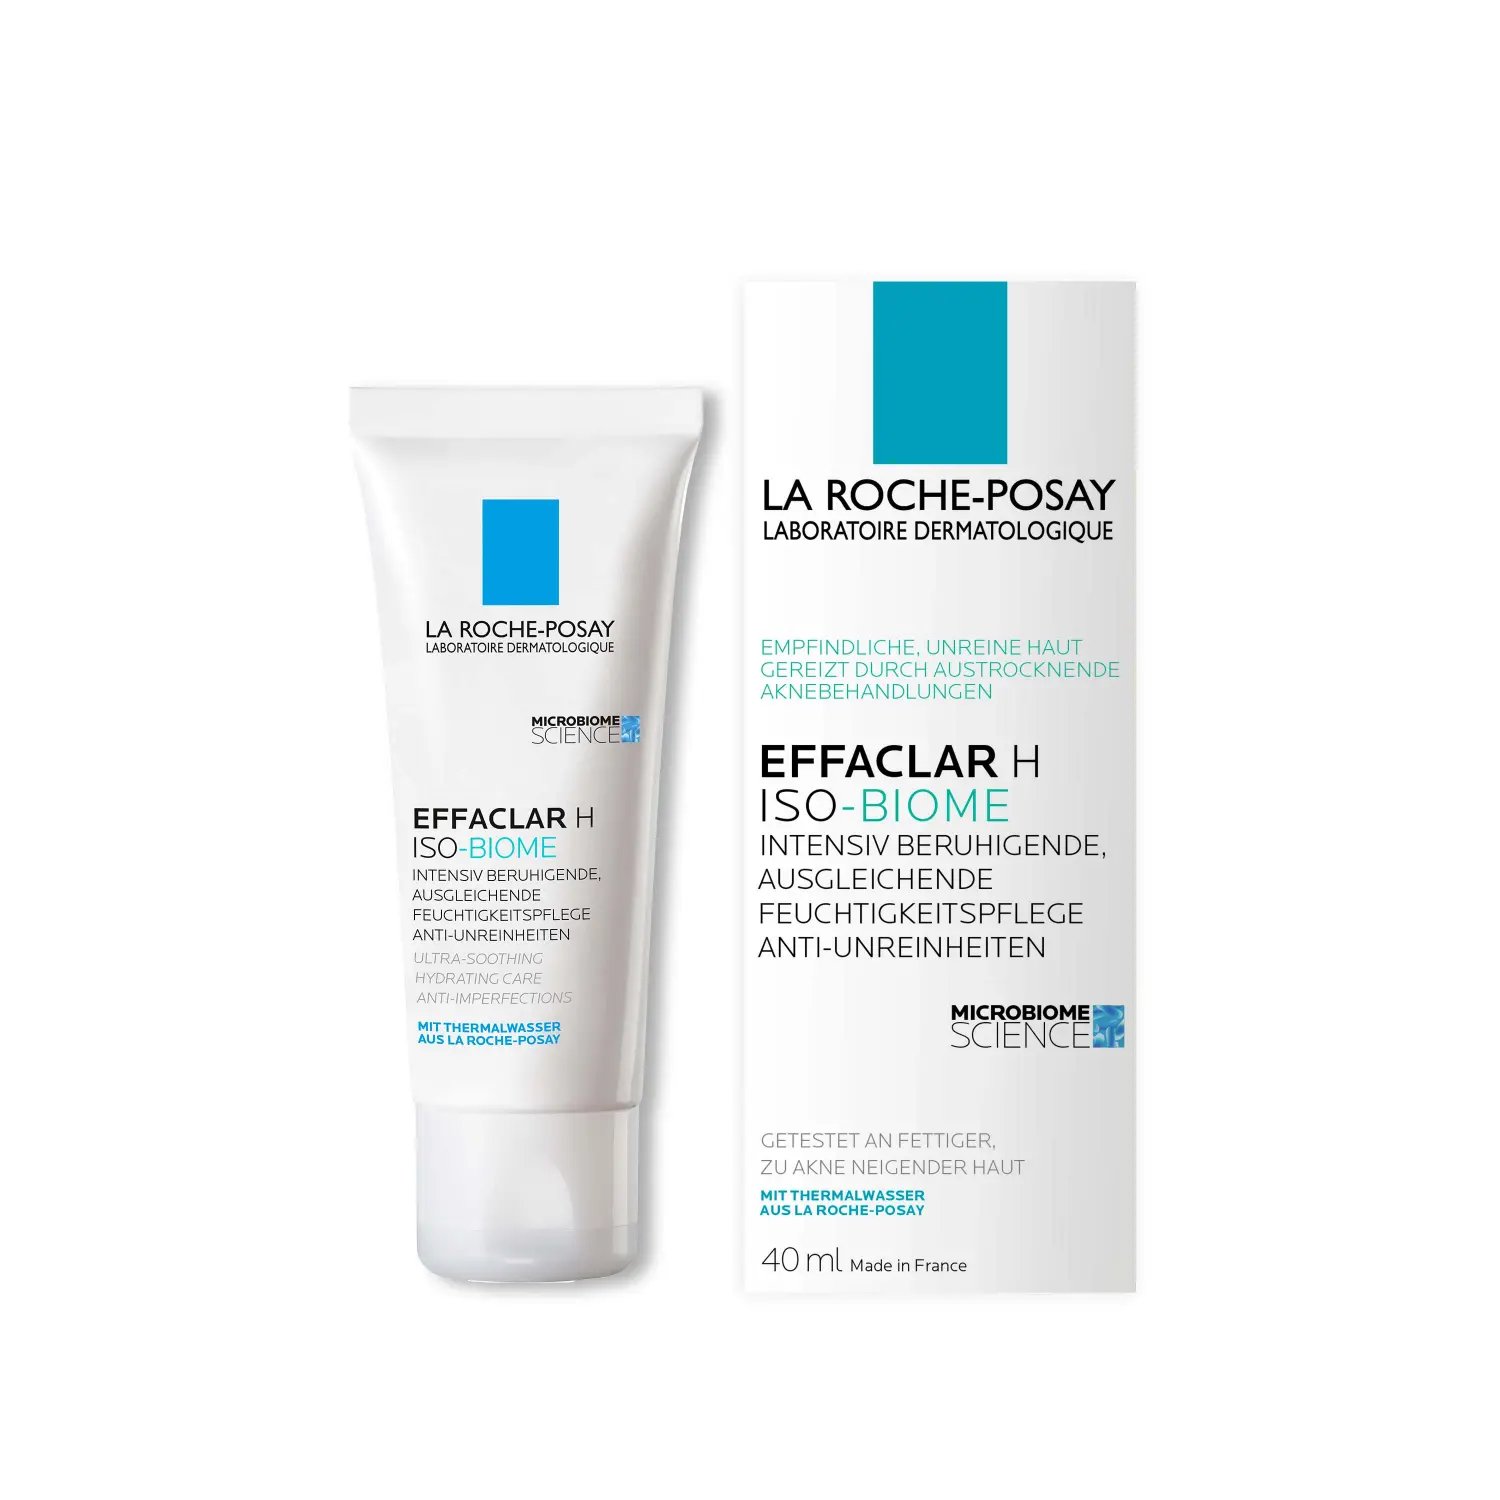 La Roche Posay 17862148 Effaclar H Iso-Biome Gesichtspflege Anti-Pickelpflege Box And Product